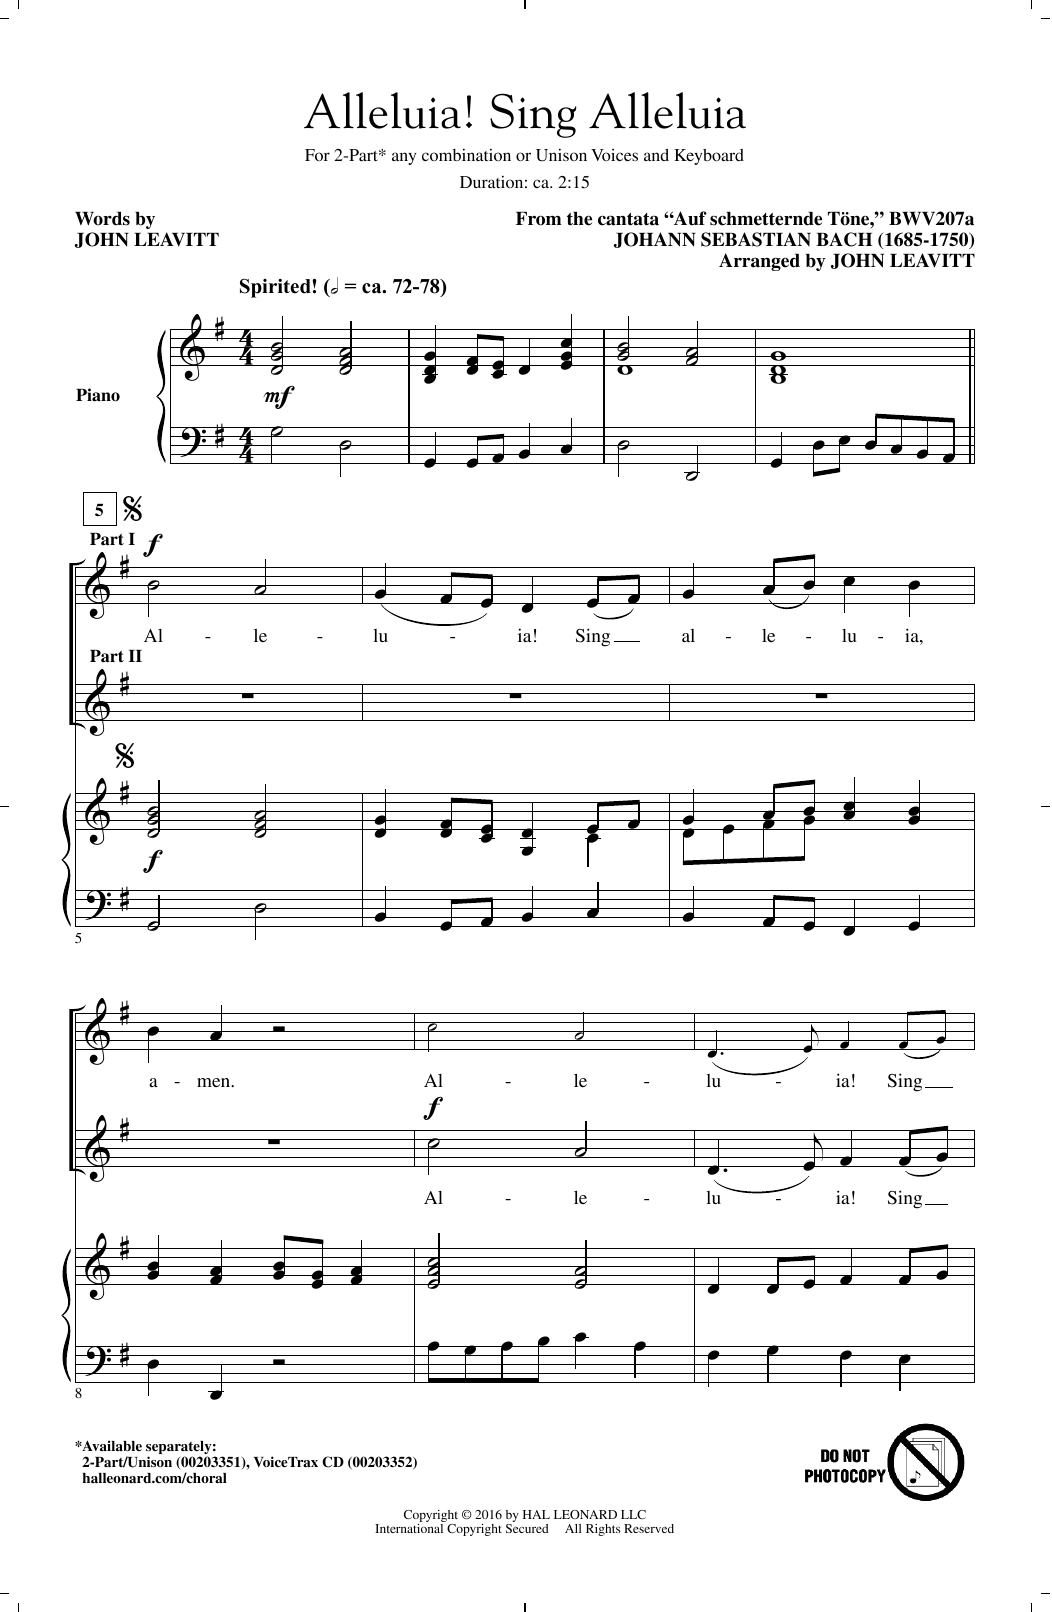 Download John Leavitt Alleluia! Sing Alleluia Sheet Music and learn how to play 2-Part Choir PDF digital score in minutes